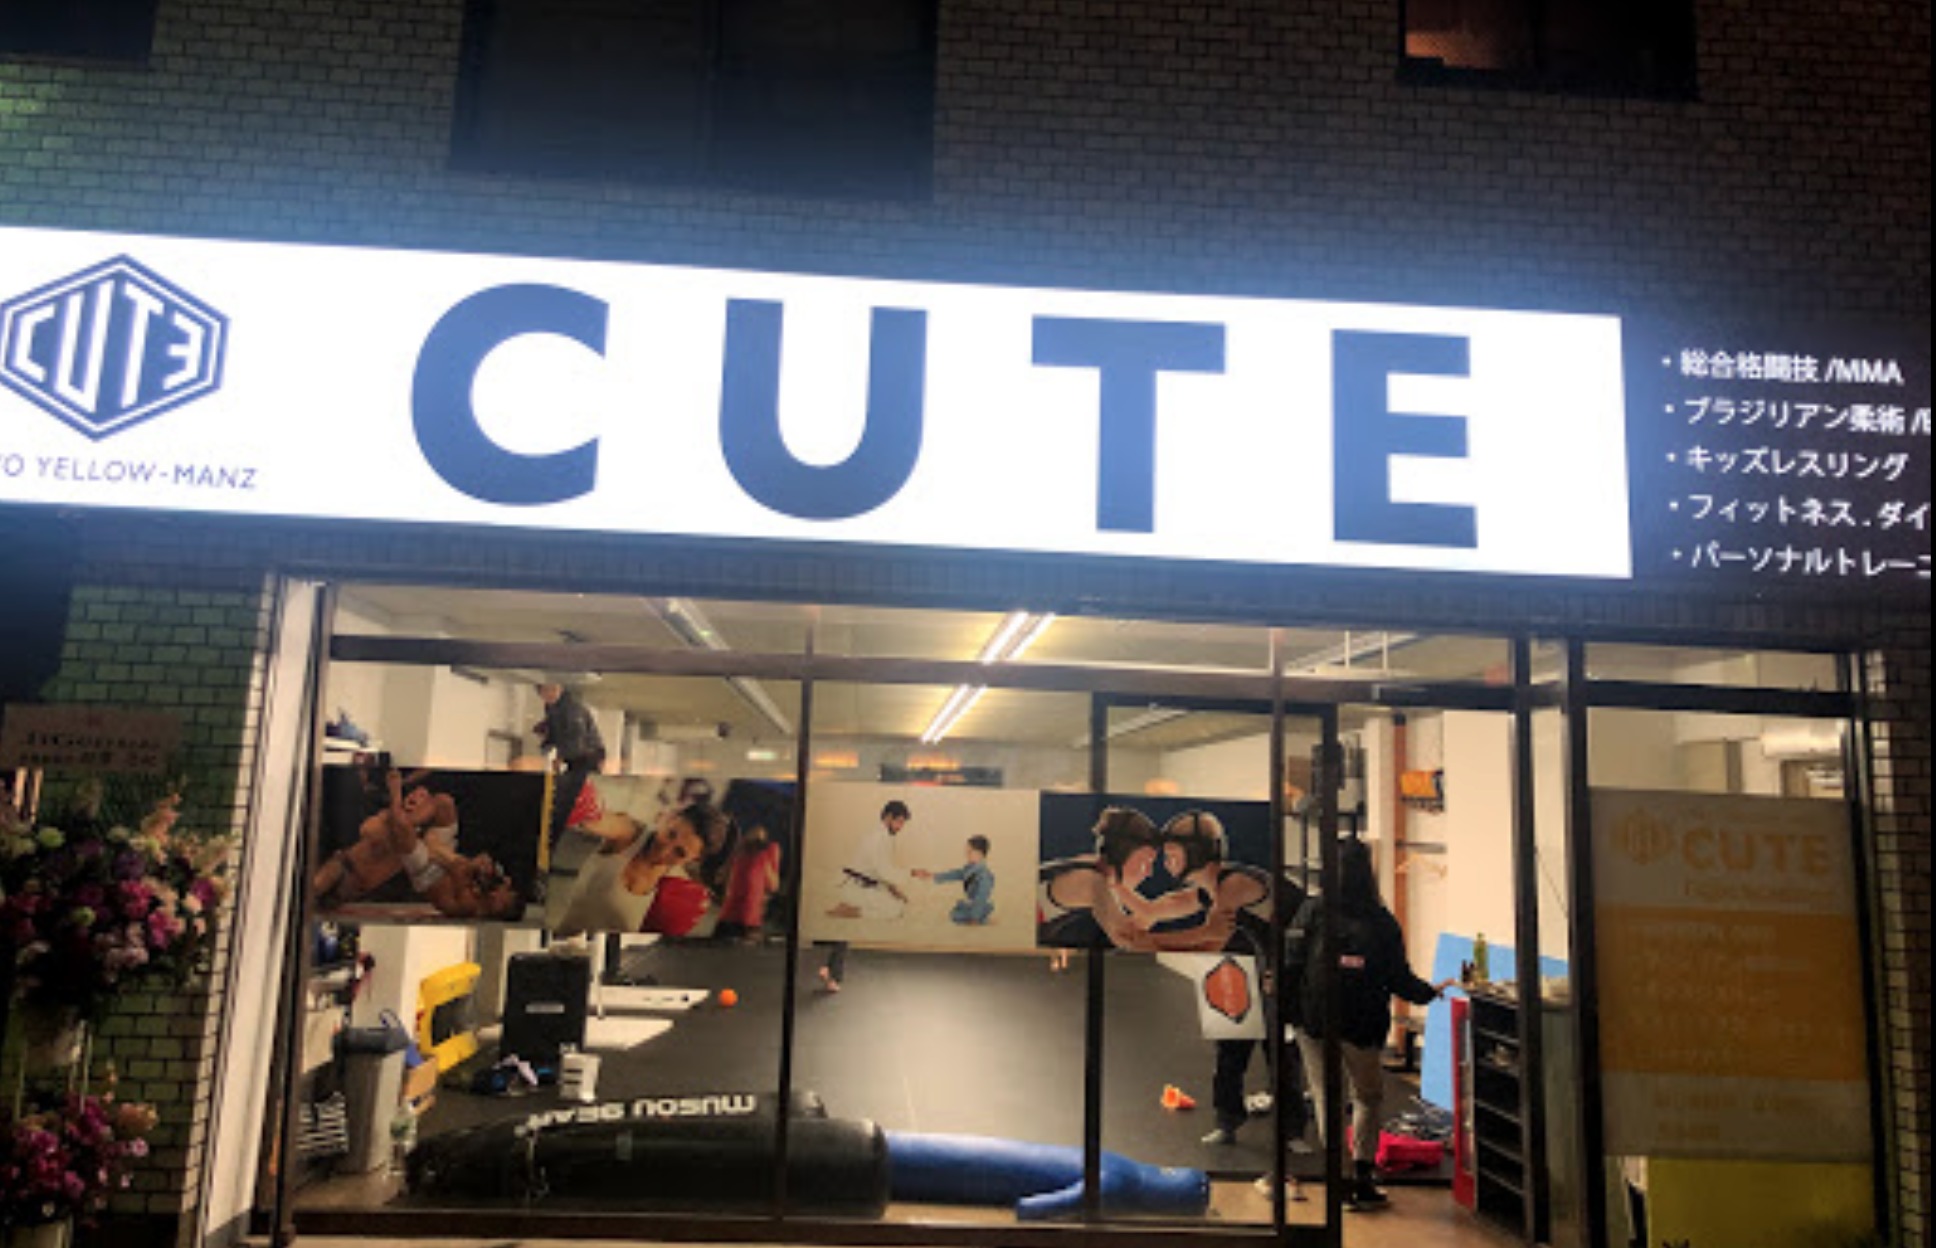 CUTE(総合格闘技 柔術 キッズレスリング ヨガ ジム)の施設画像